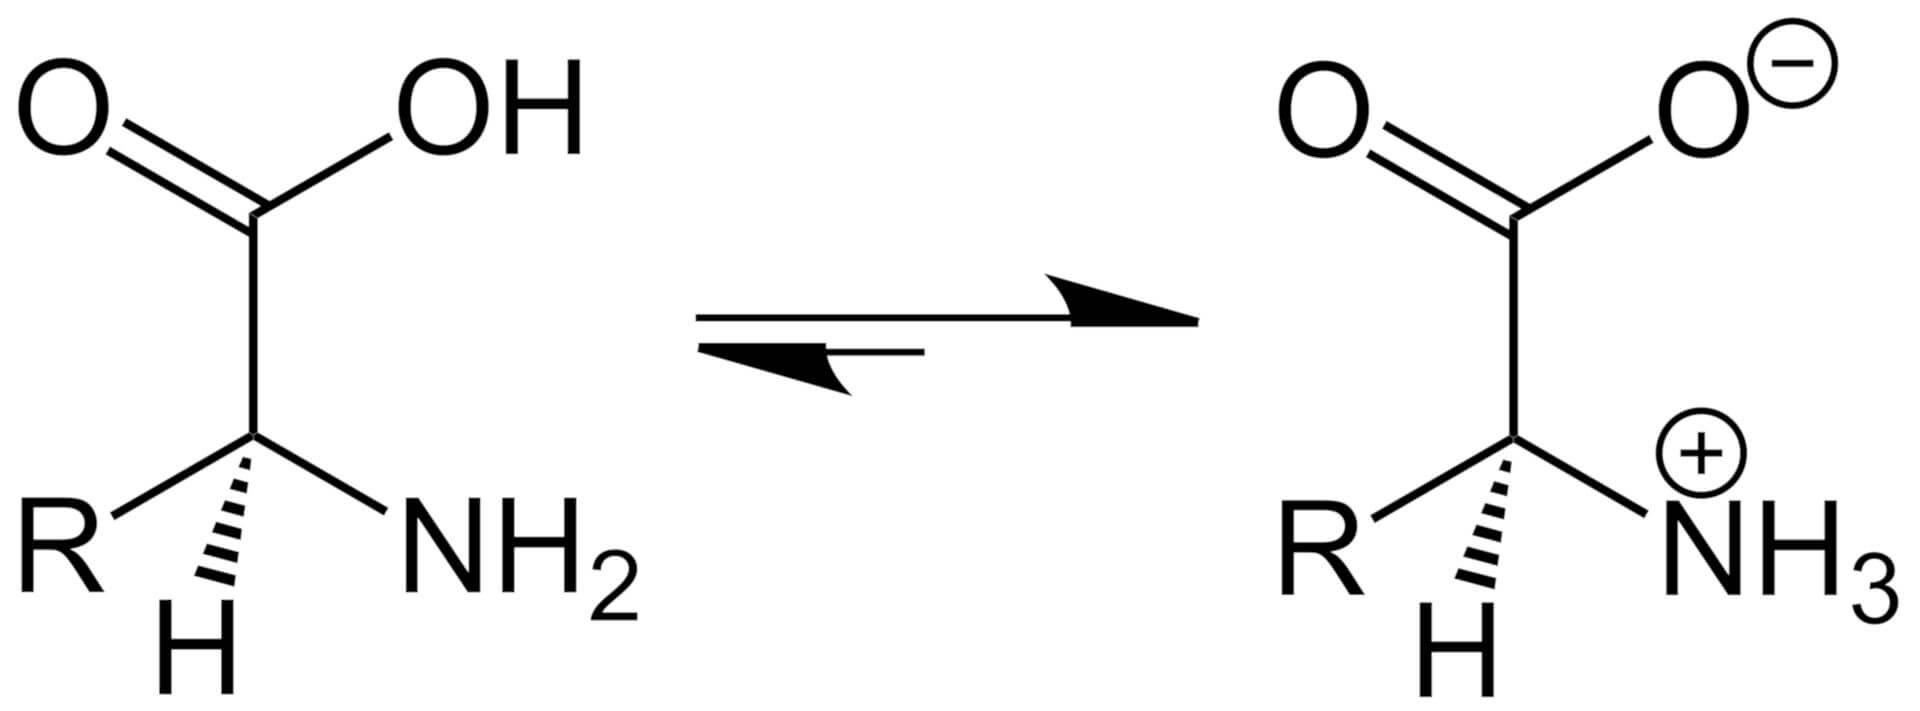 L-Aminosäure als Zwitterion